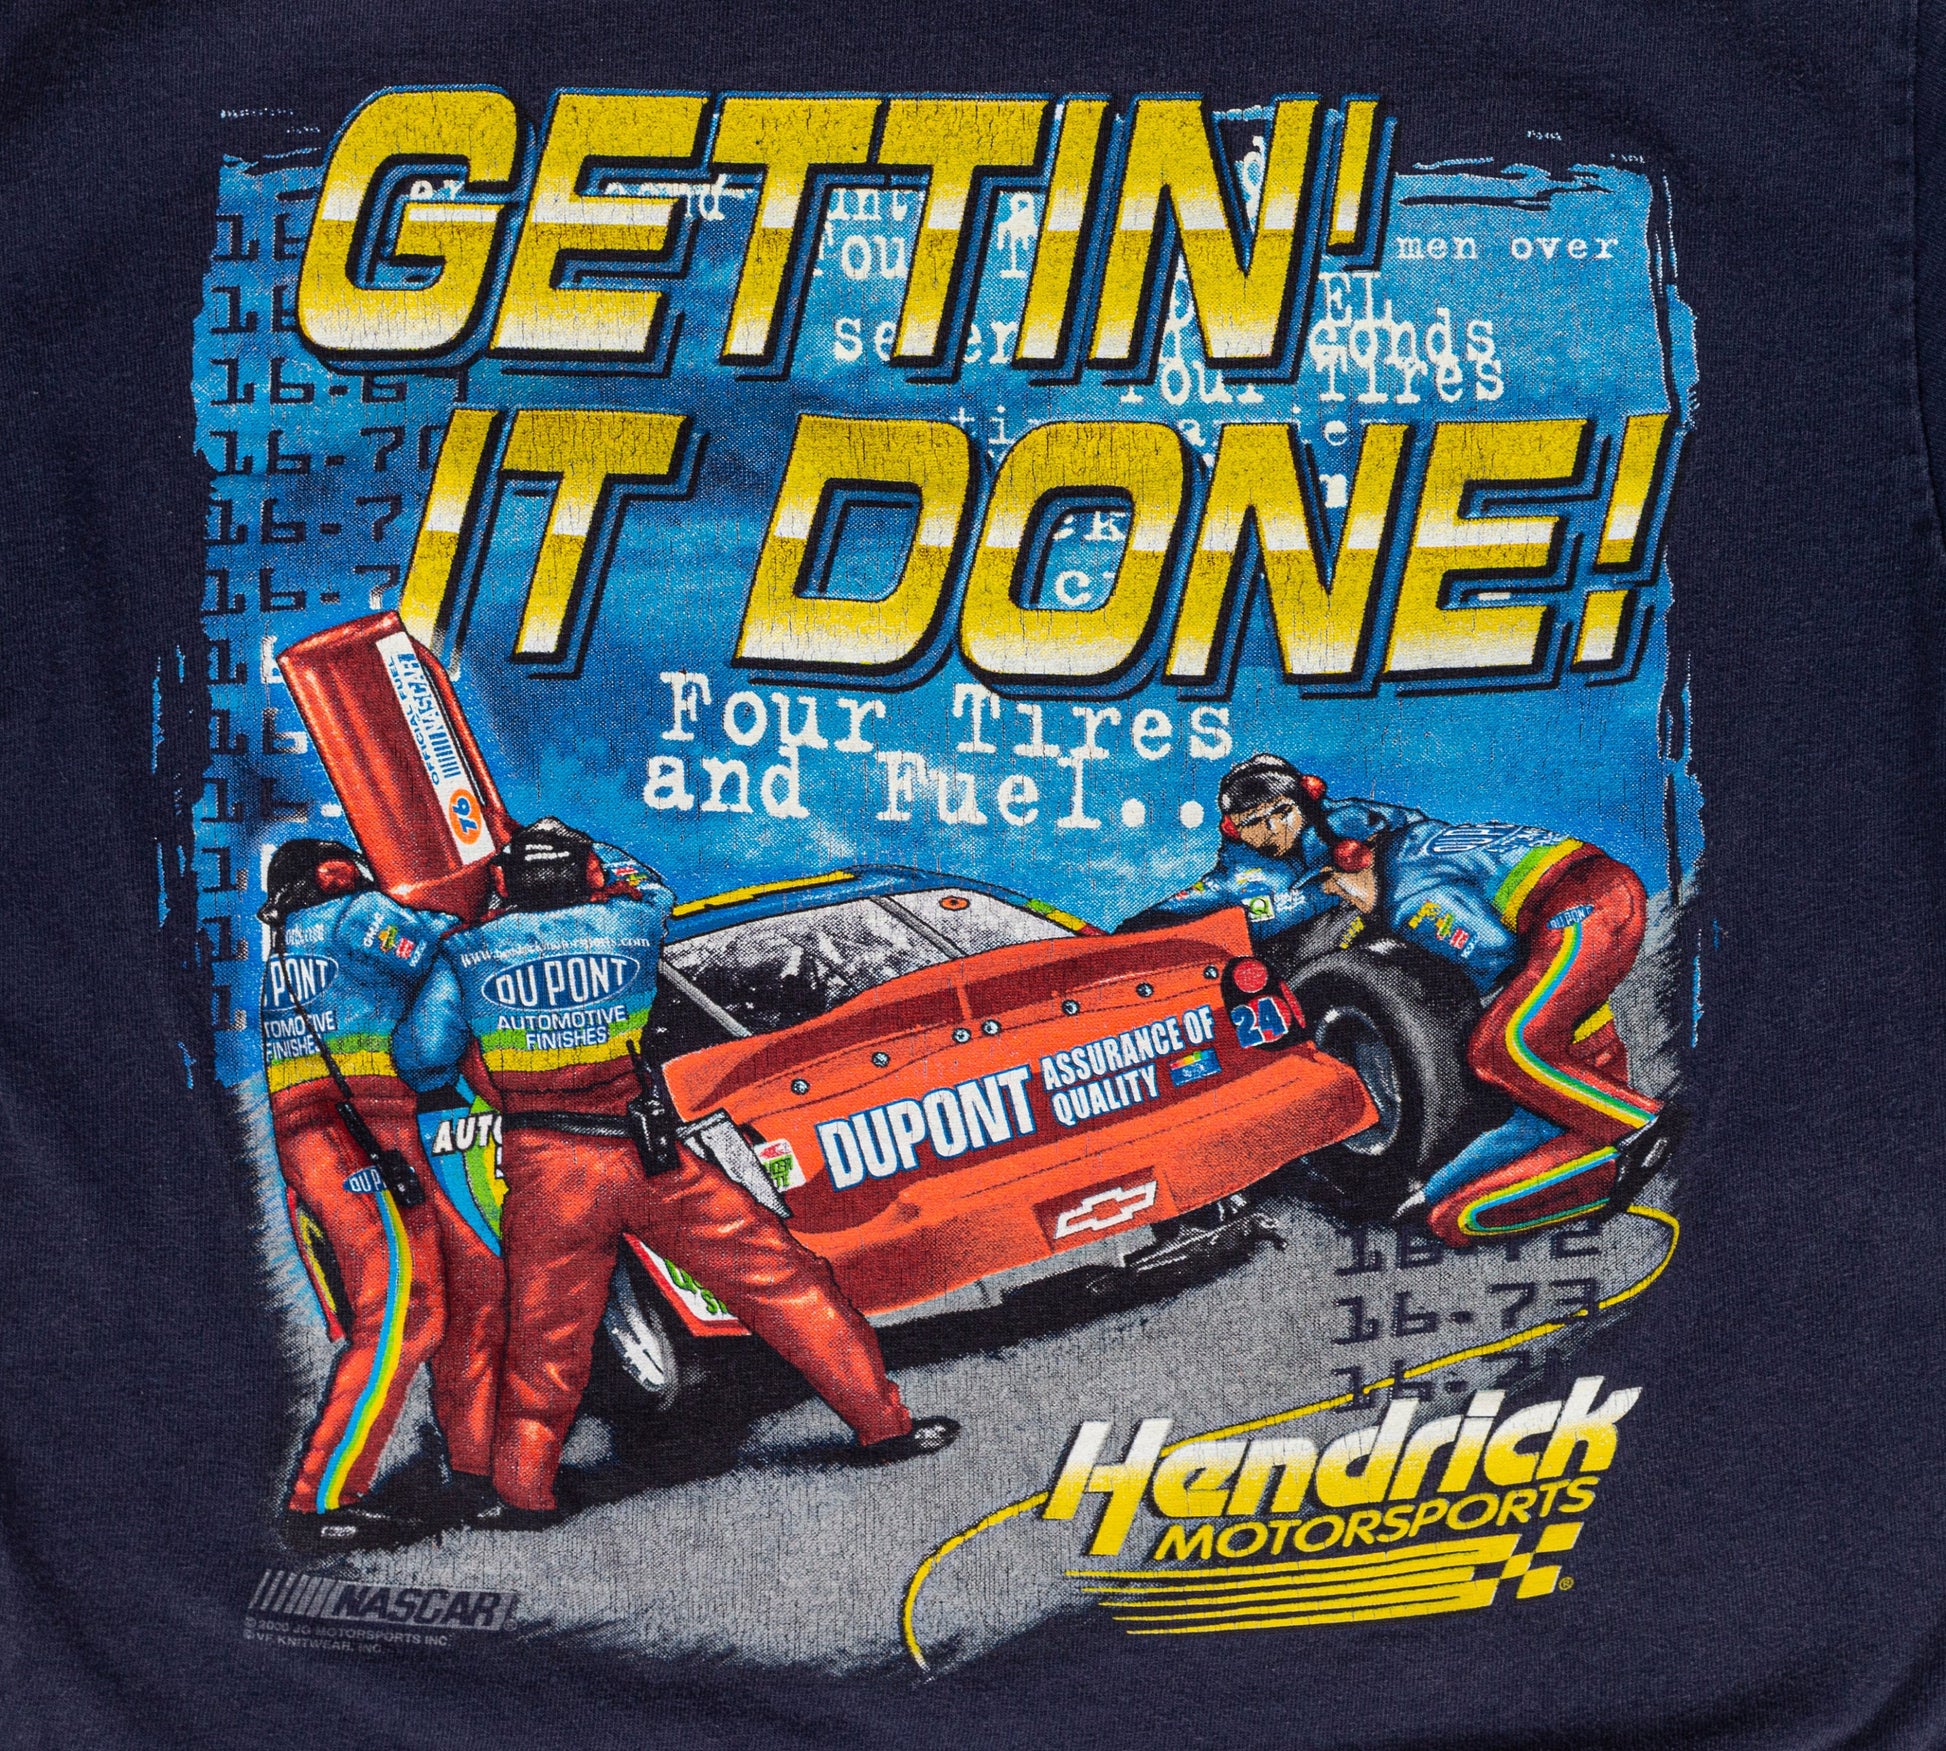 90s Jeff Gordon "Gettin' It Done!" NASCAR Tee - Extra Small 